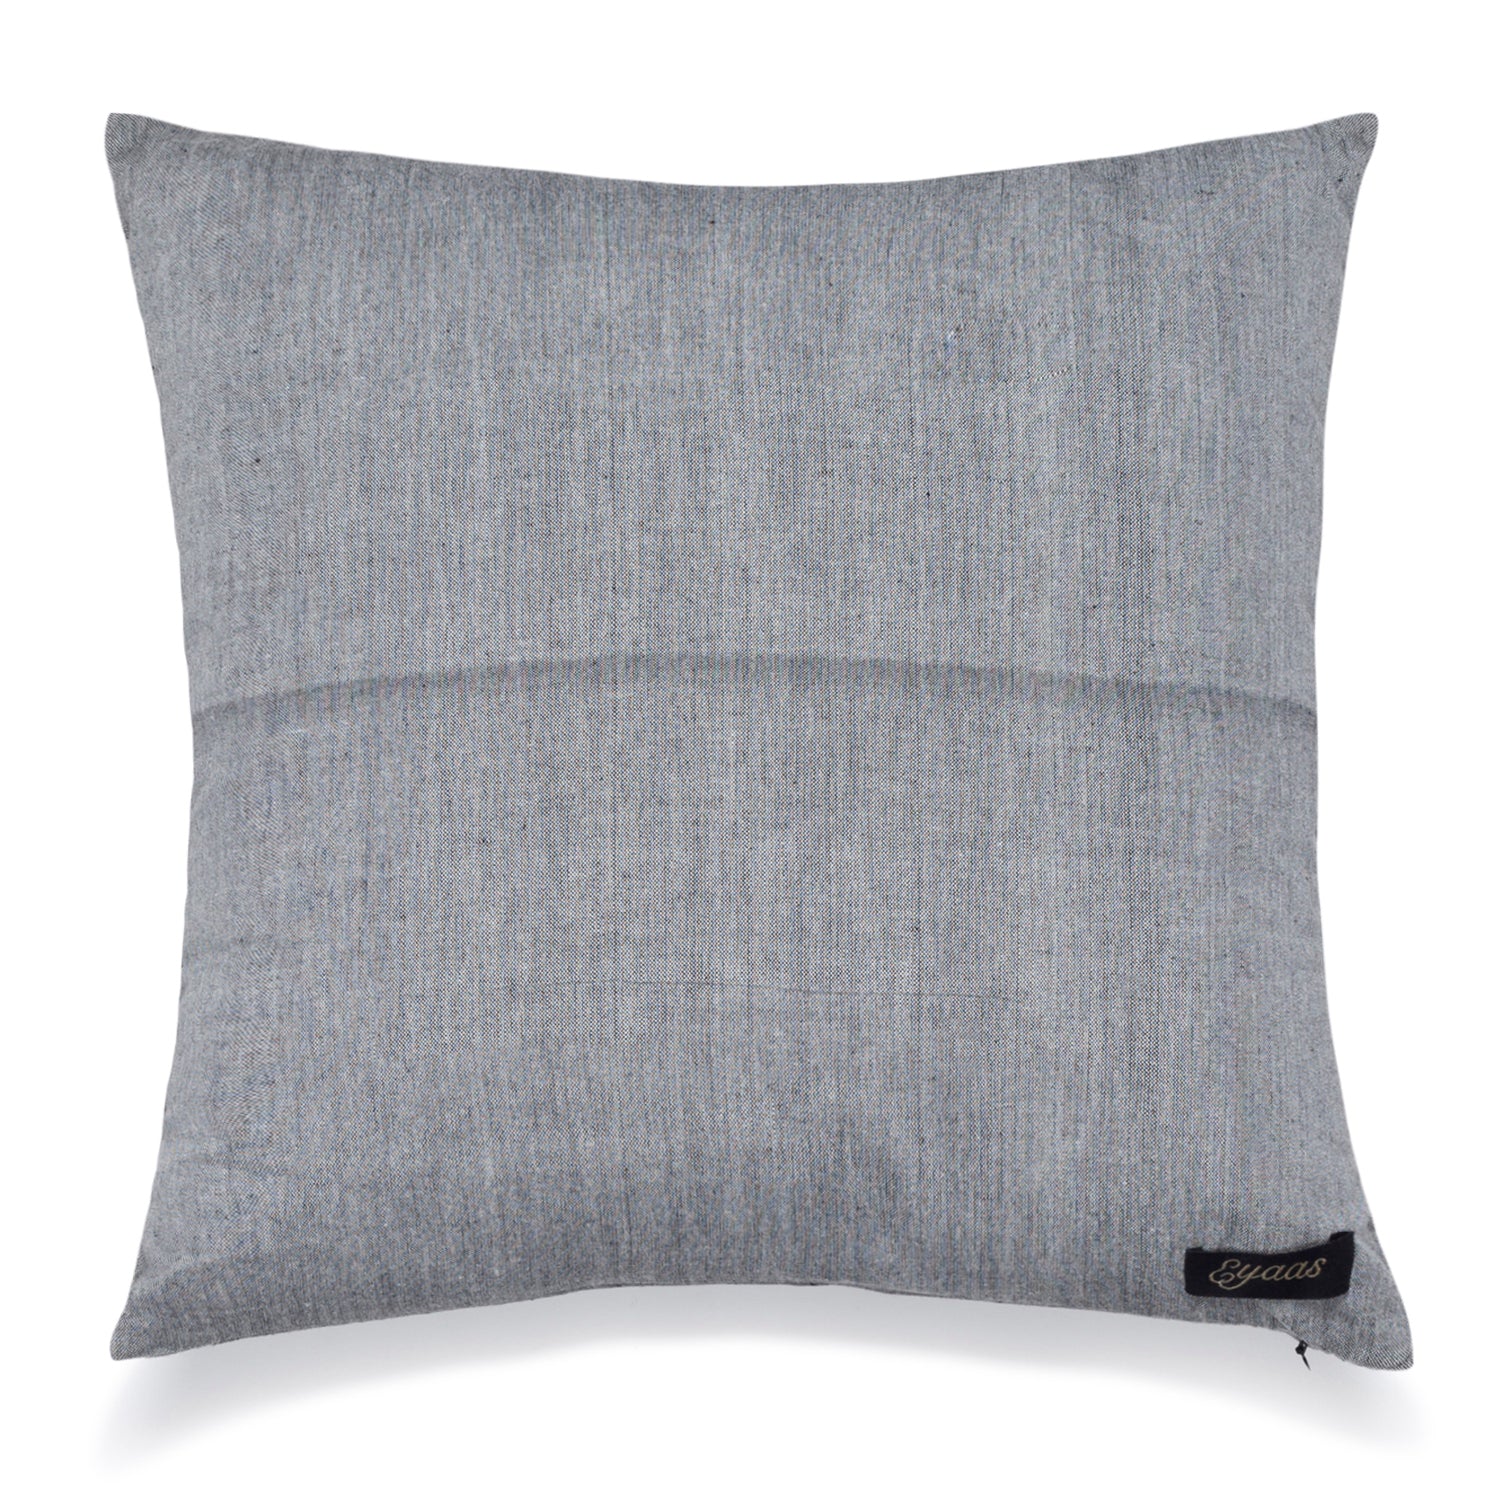 Ikat Cushion Cover 16x16 - Set of 2